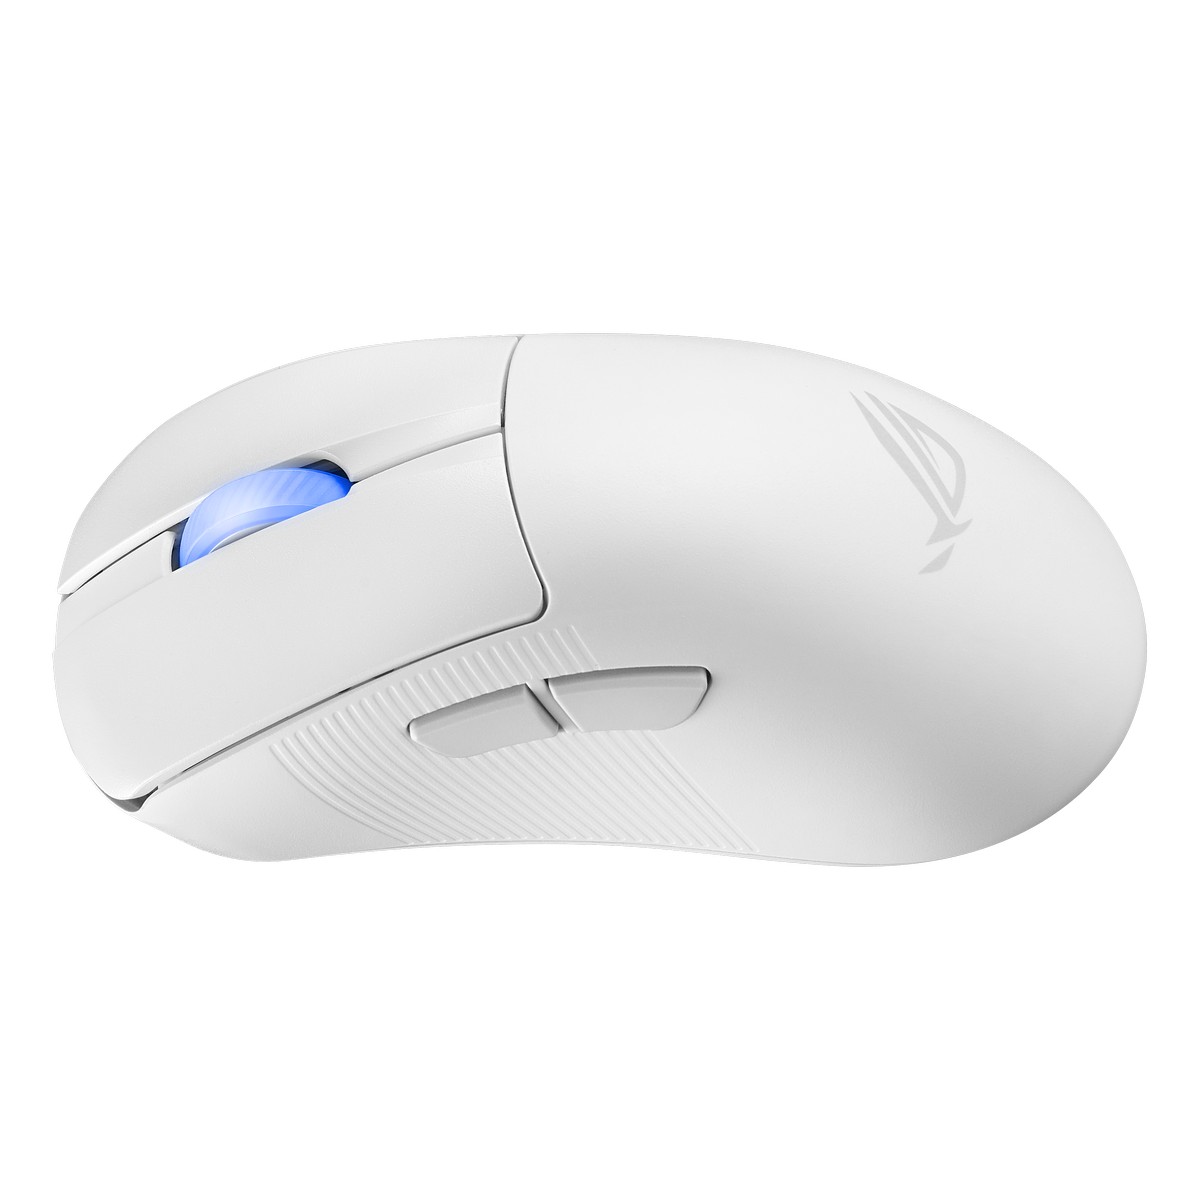 Asus - ASUS ROG Keris II Wireless Ace Optical Gaming Mouse - White